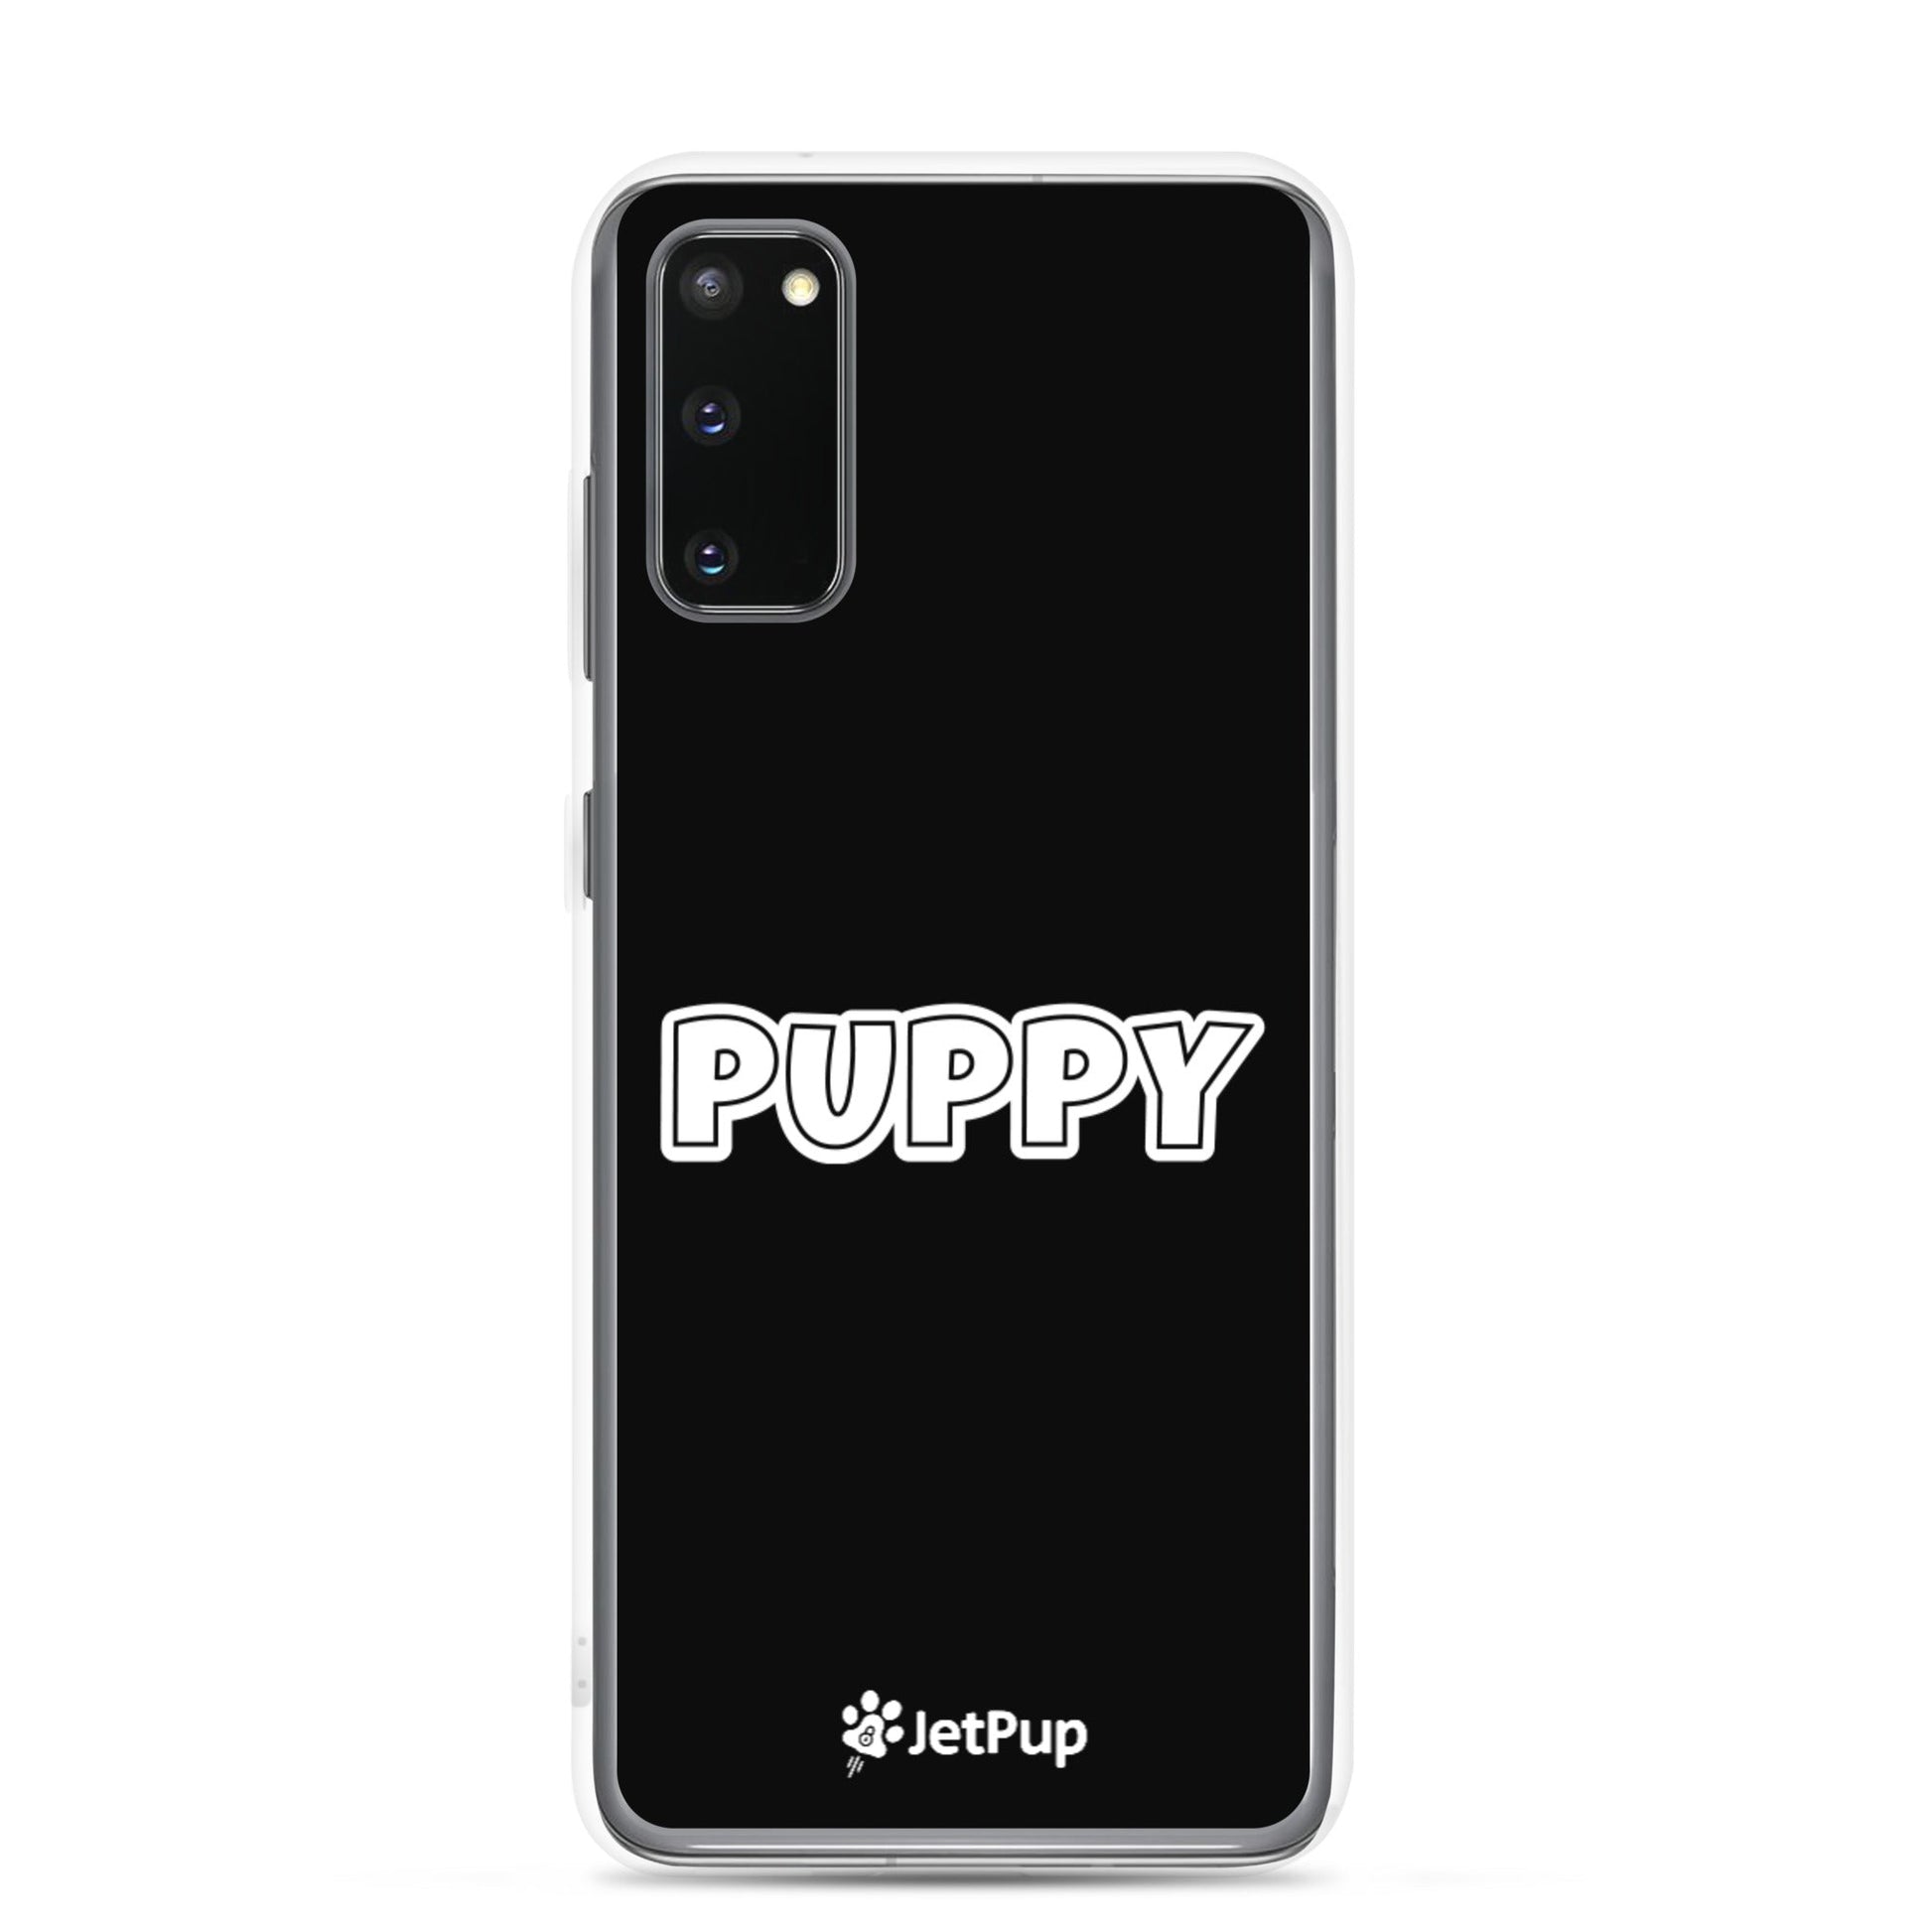 Puppy Samsung Case - Black - JetPup